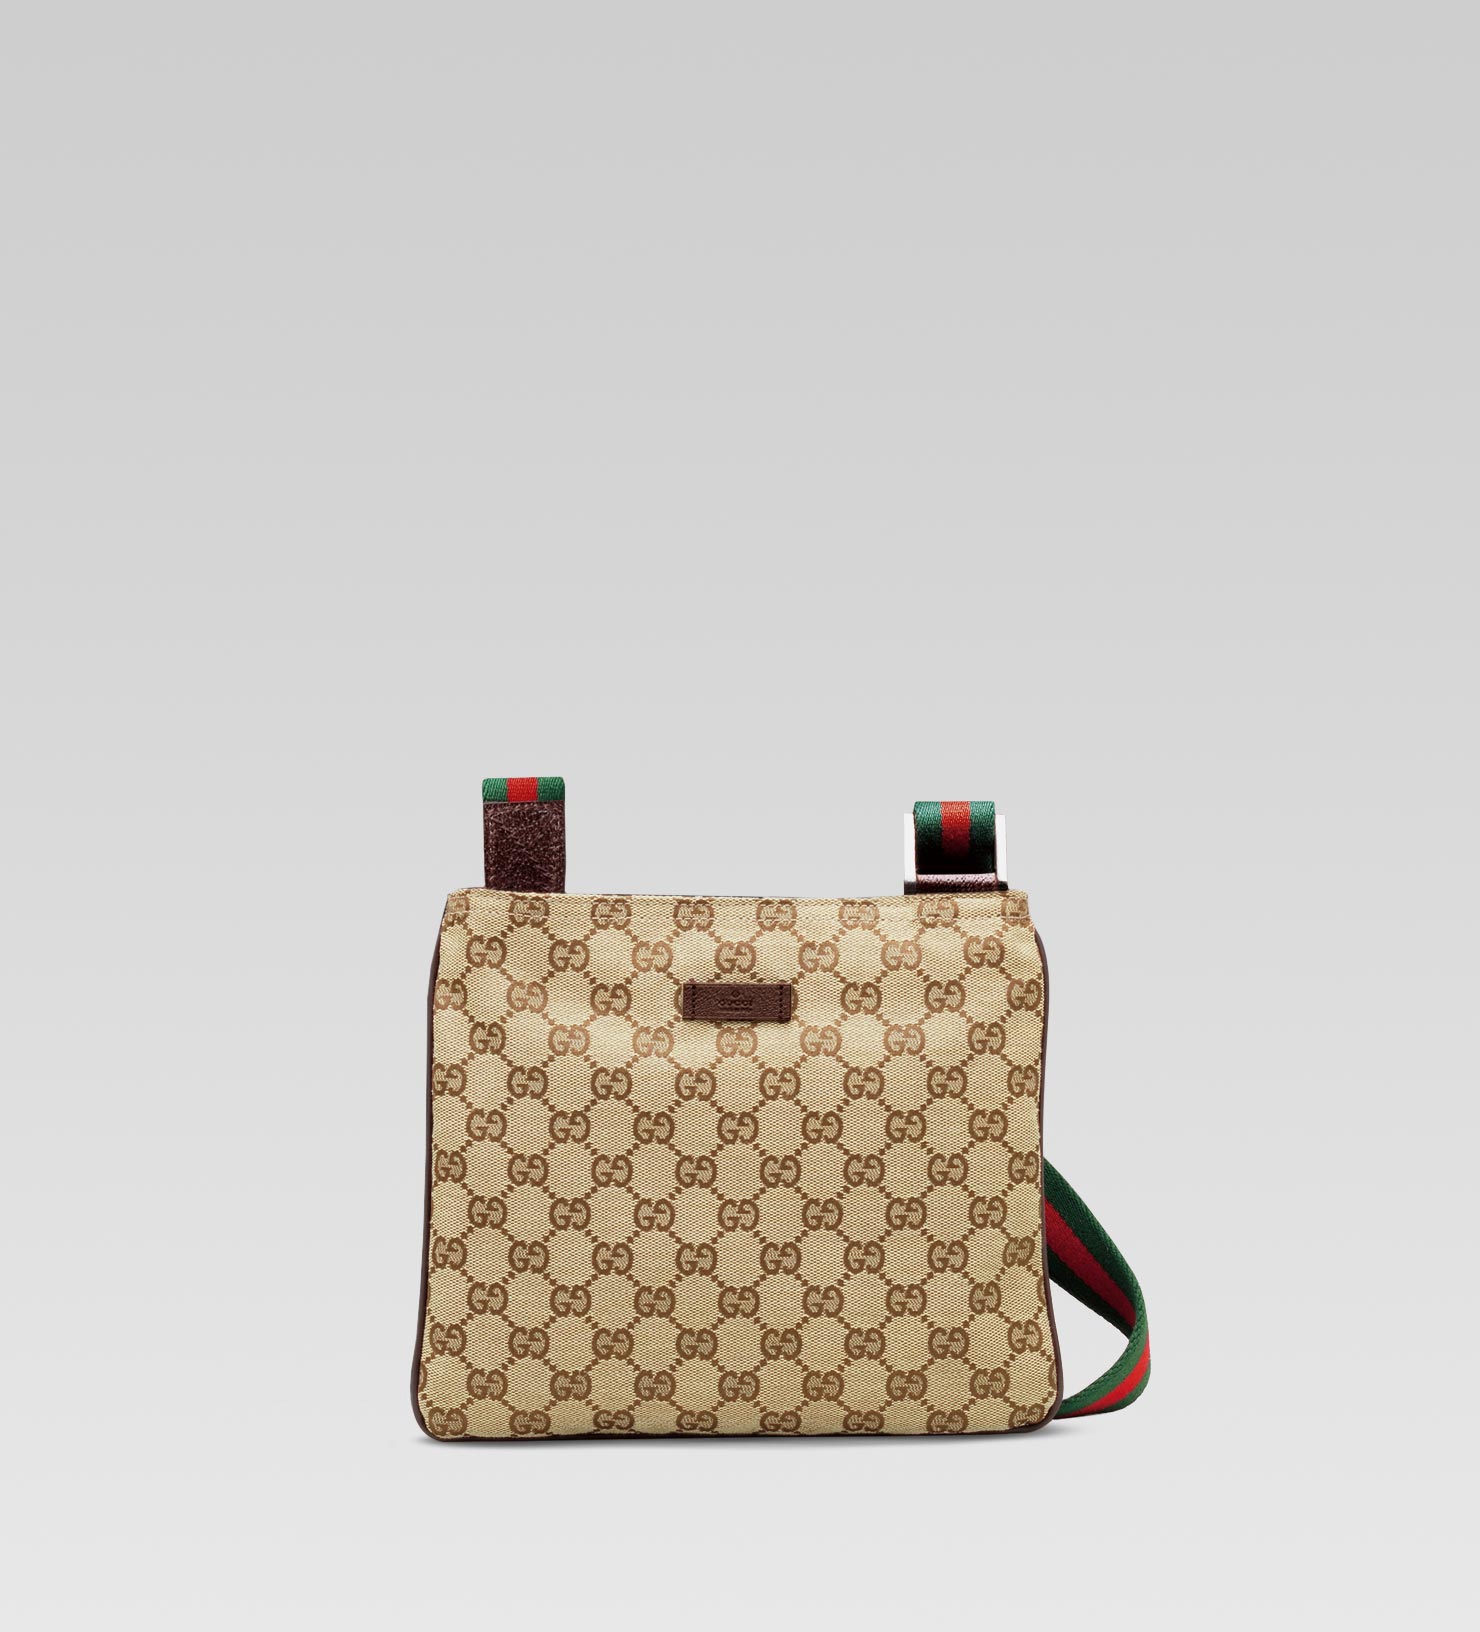 Lyst - Gucci Original Gg Canvas Messenger Bag in Natural for Men